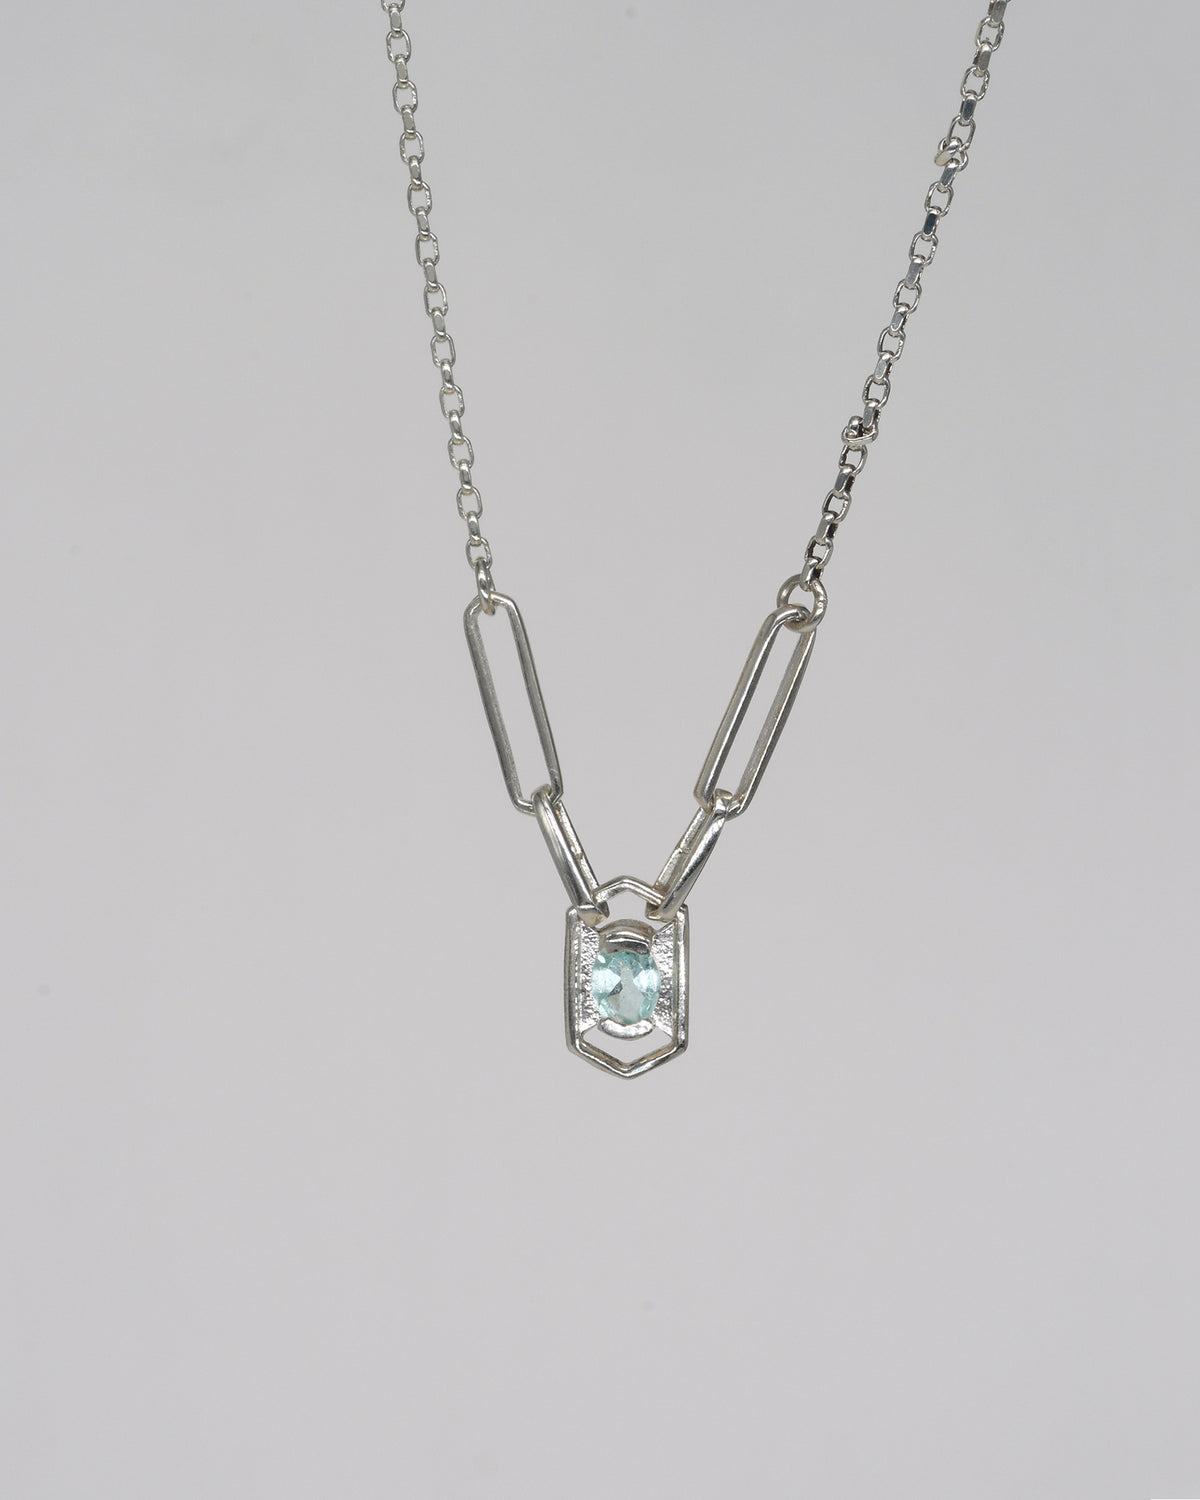 Mini Alexis Silver Necklace - Light Blue Tourmaline